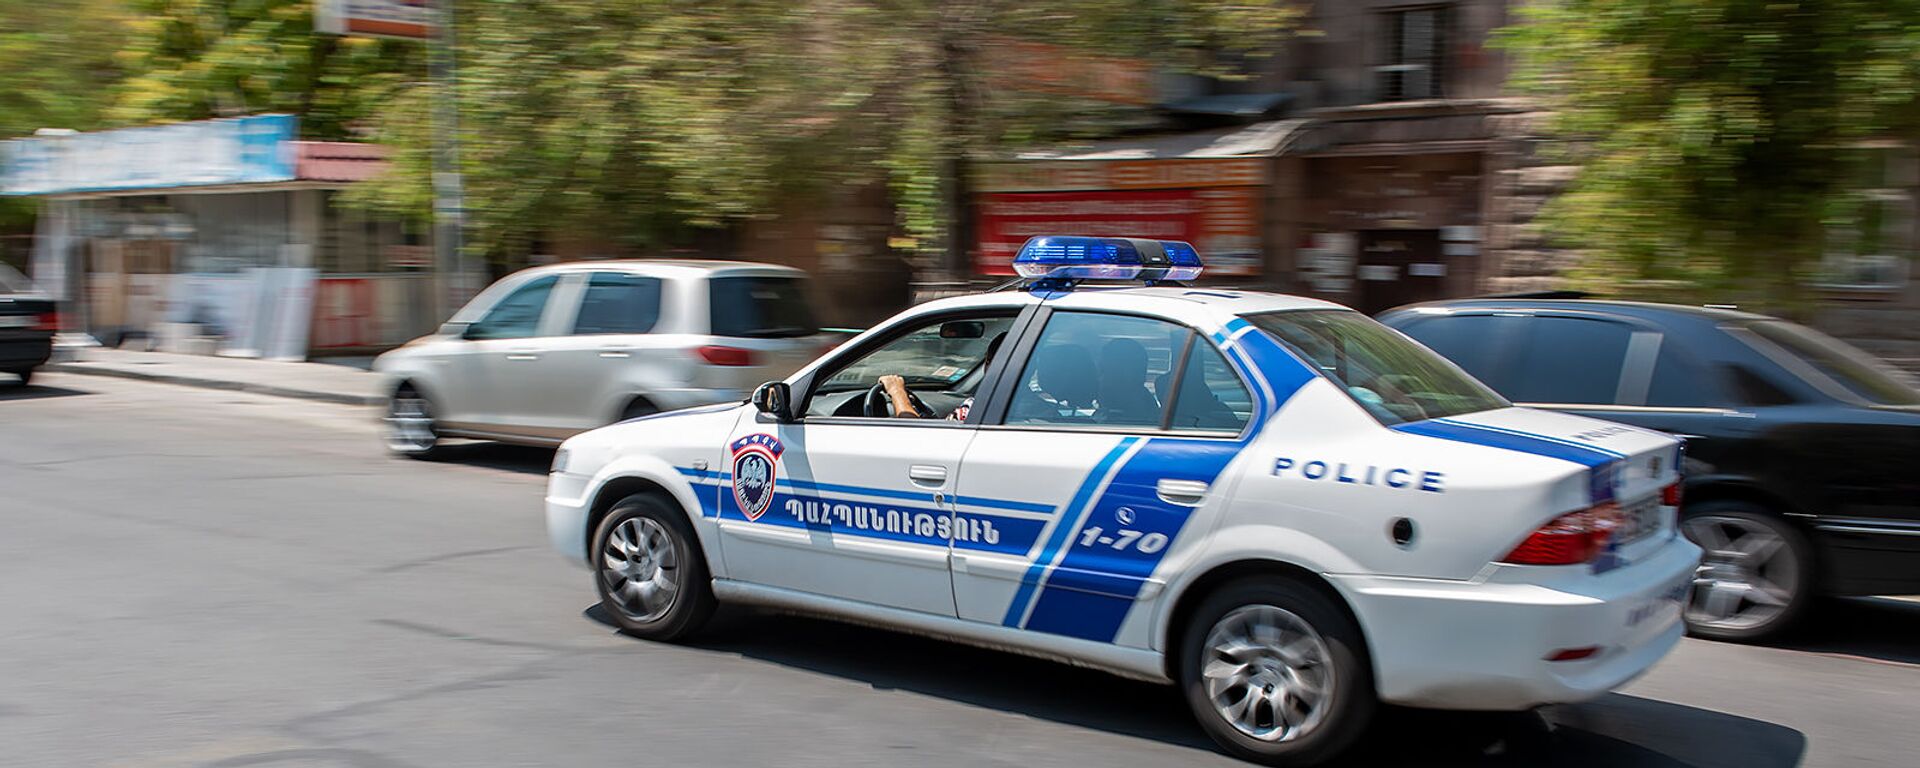 Полицейский автомобиль на улице Вардананц - Sputnik Արմենիա, 1920, 06.08.2019